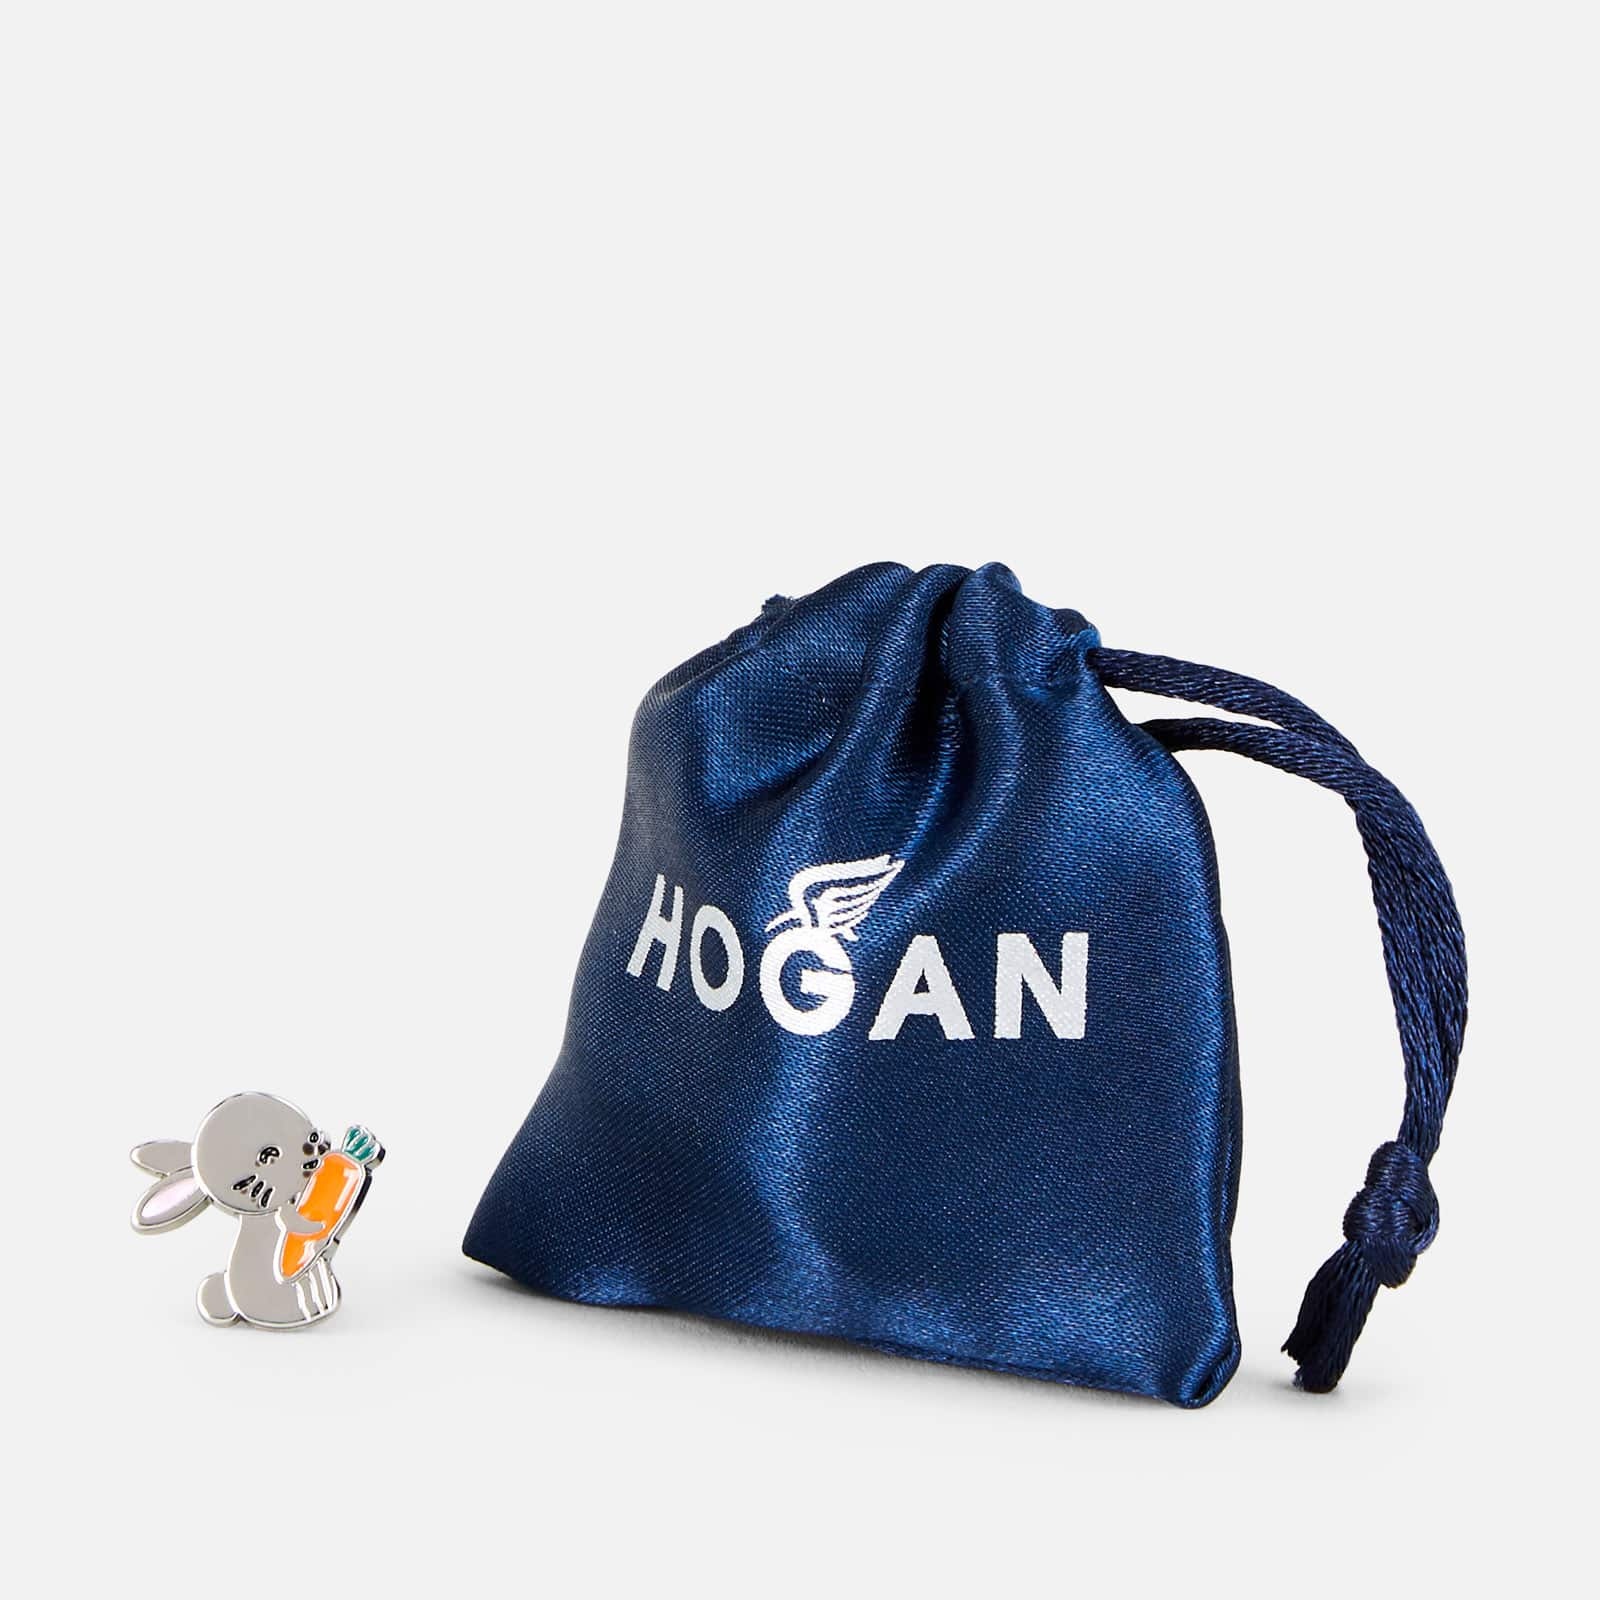 Hogan By You - Shoelace Bead CNY Orange Silver - 2